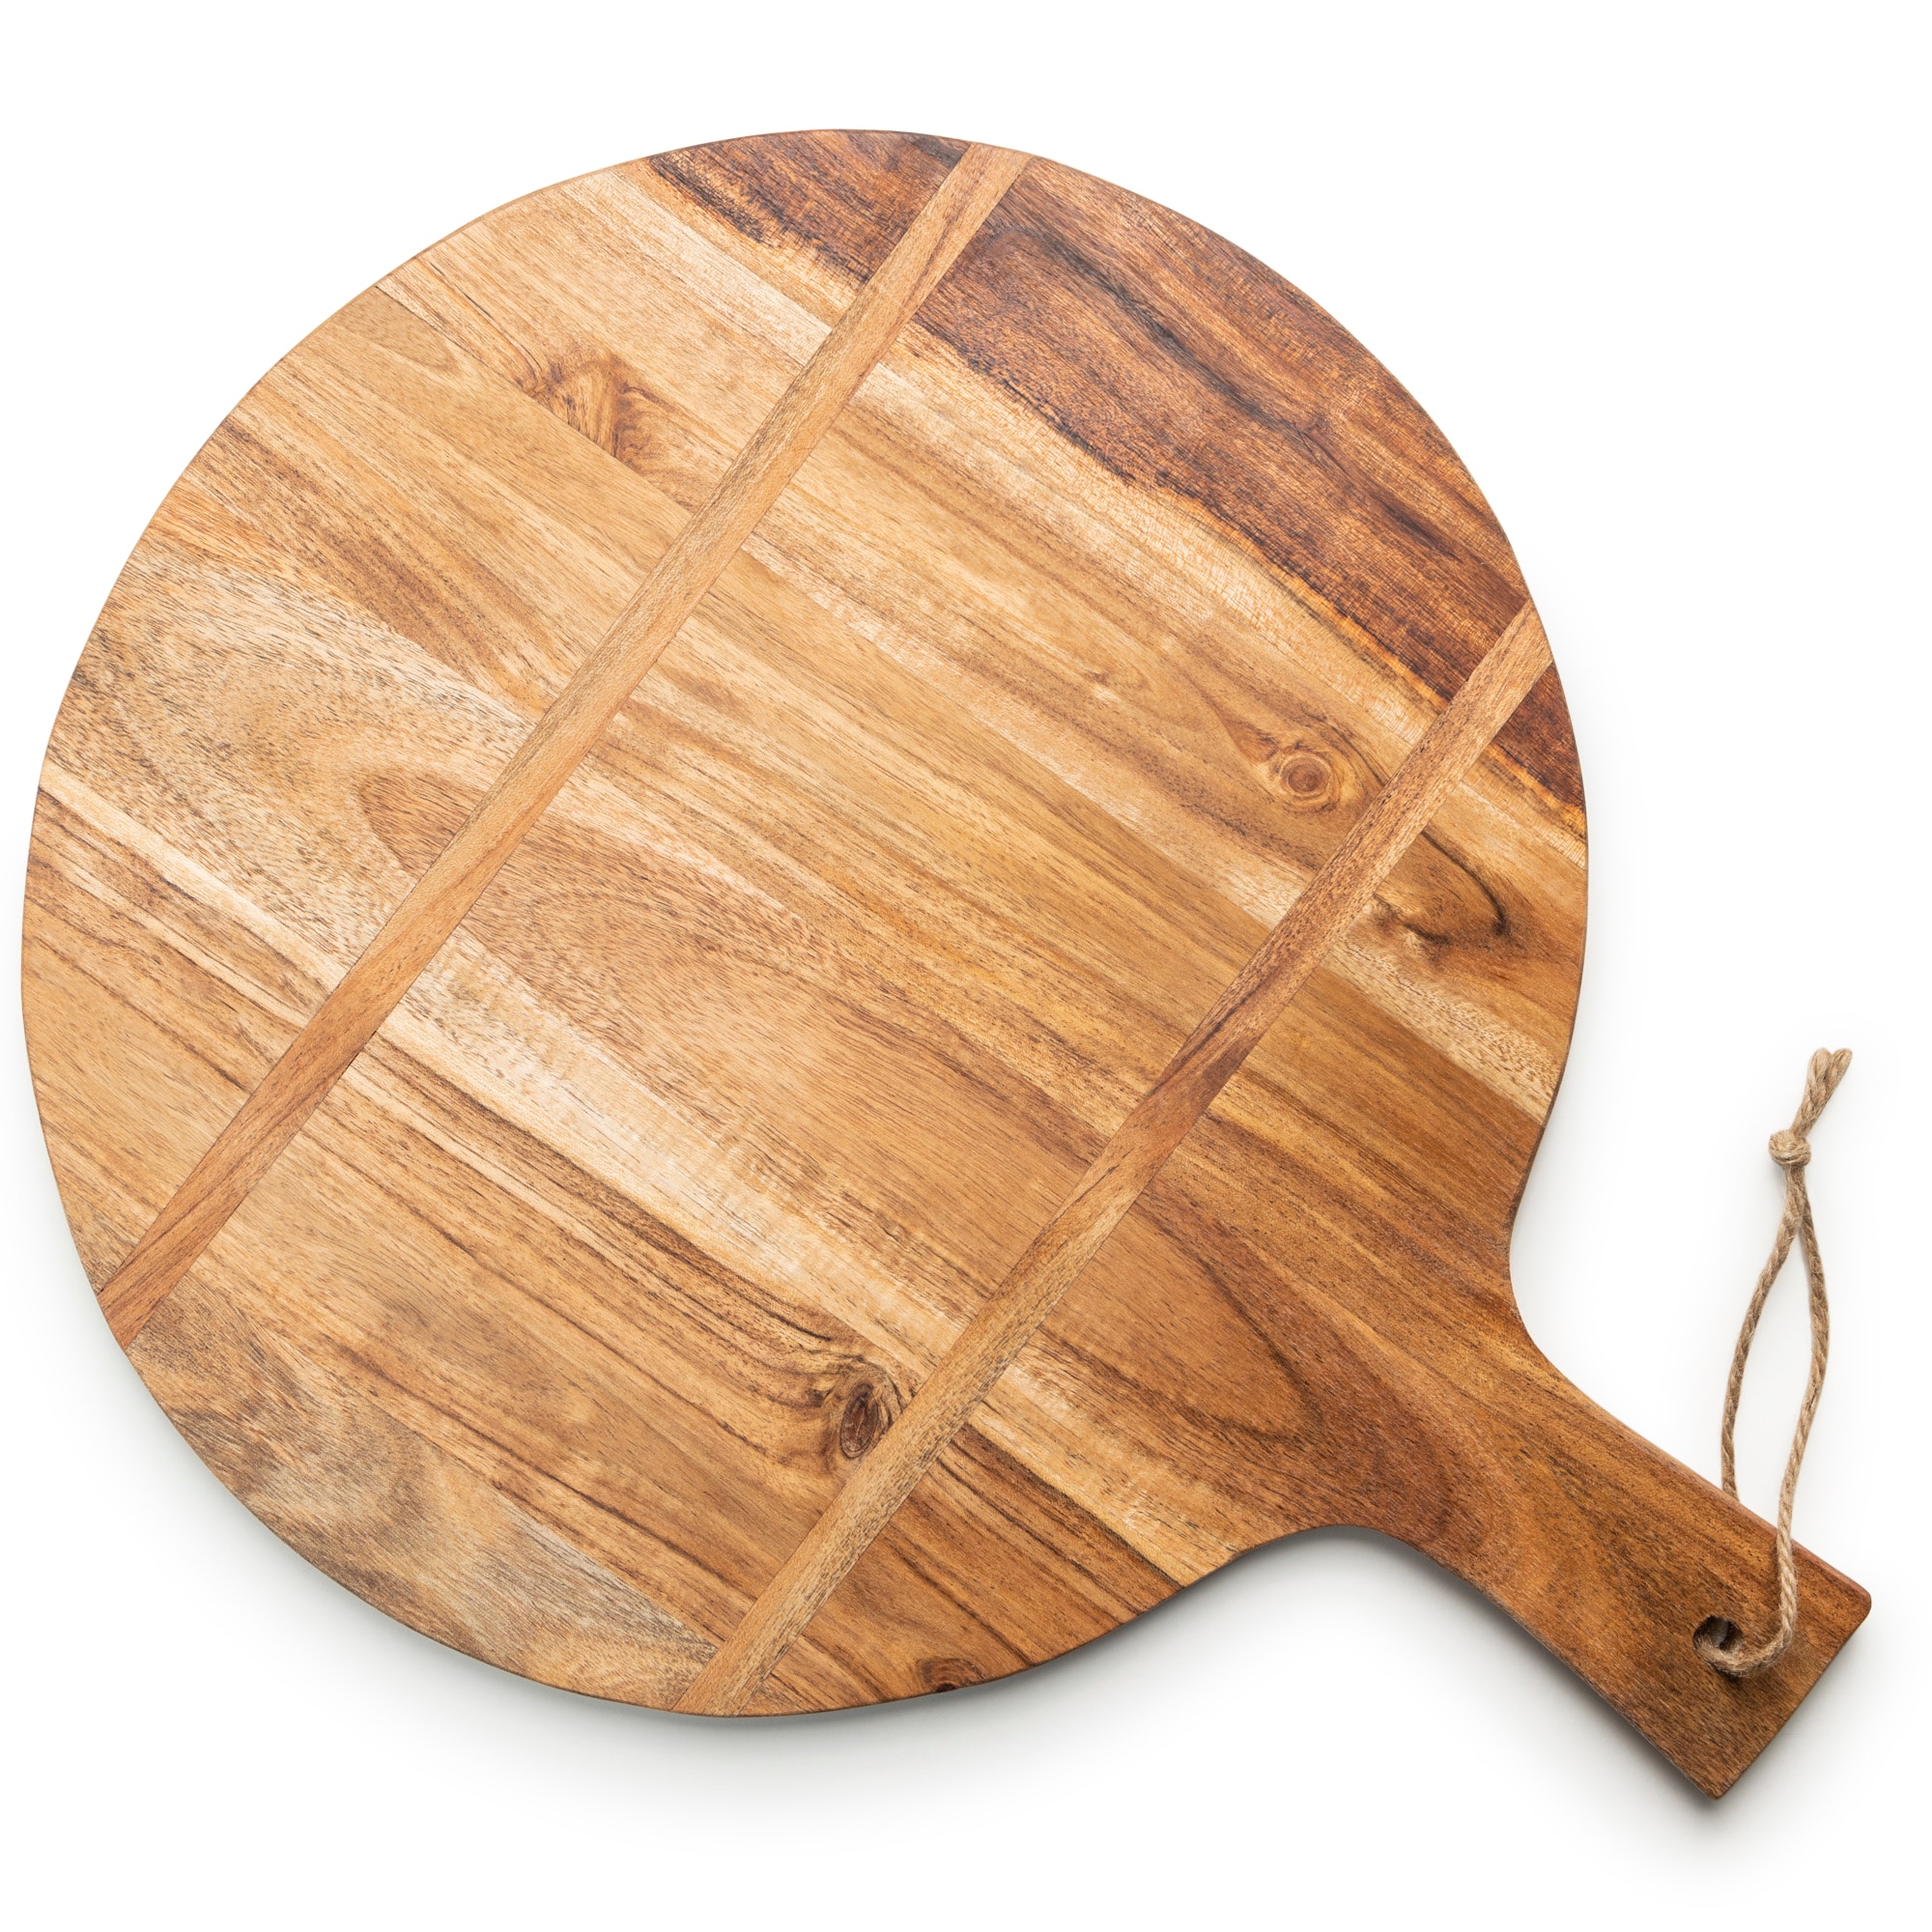  Blanco 231609 Cutting Board, One Size, Wood: Home